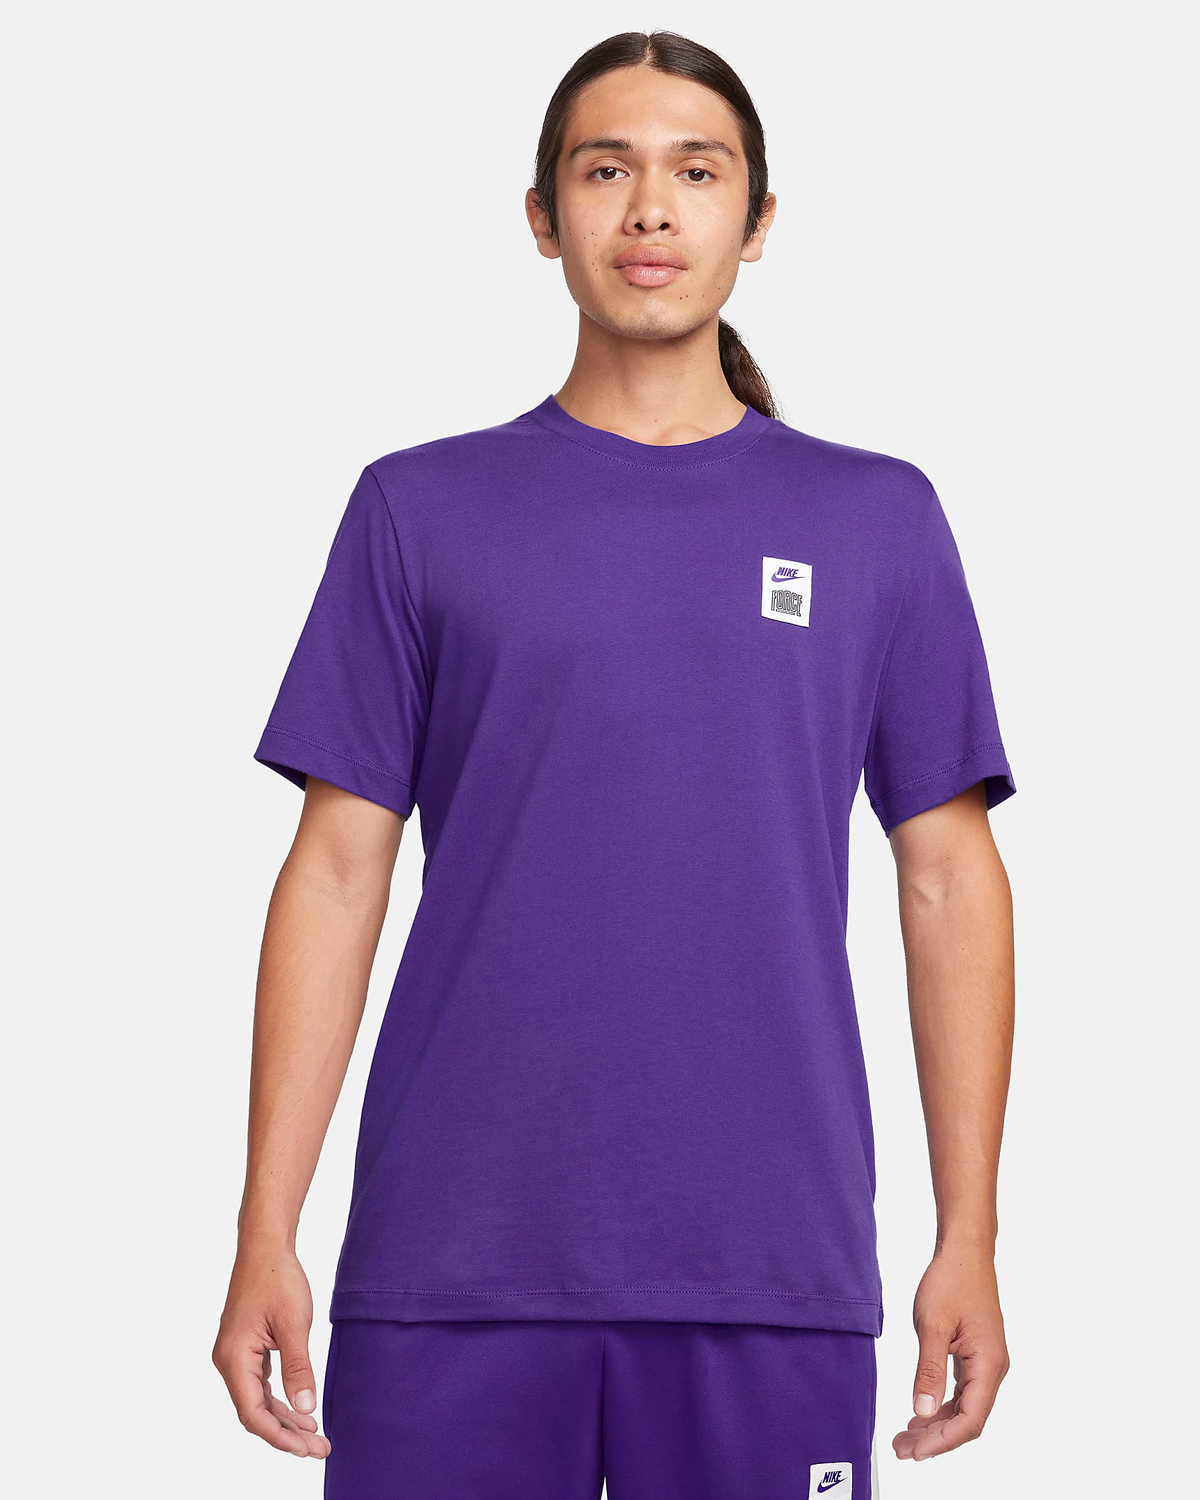 Nike-Starting-5-T-Shirt-Field-Purple-1